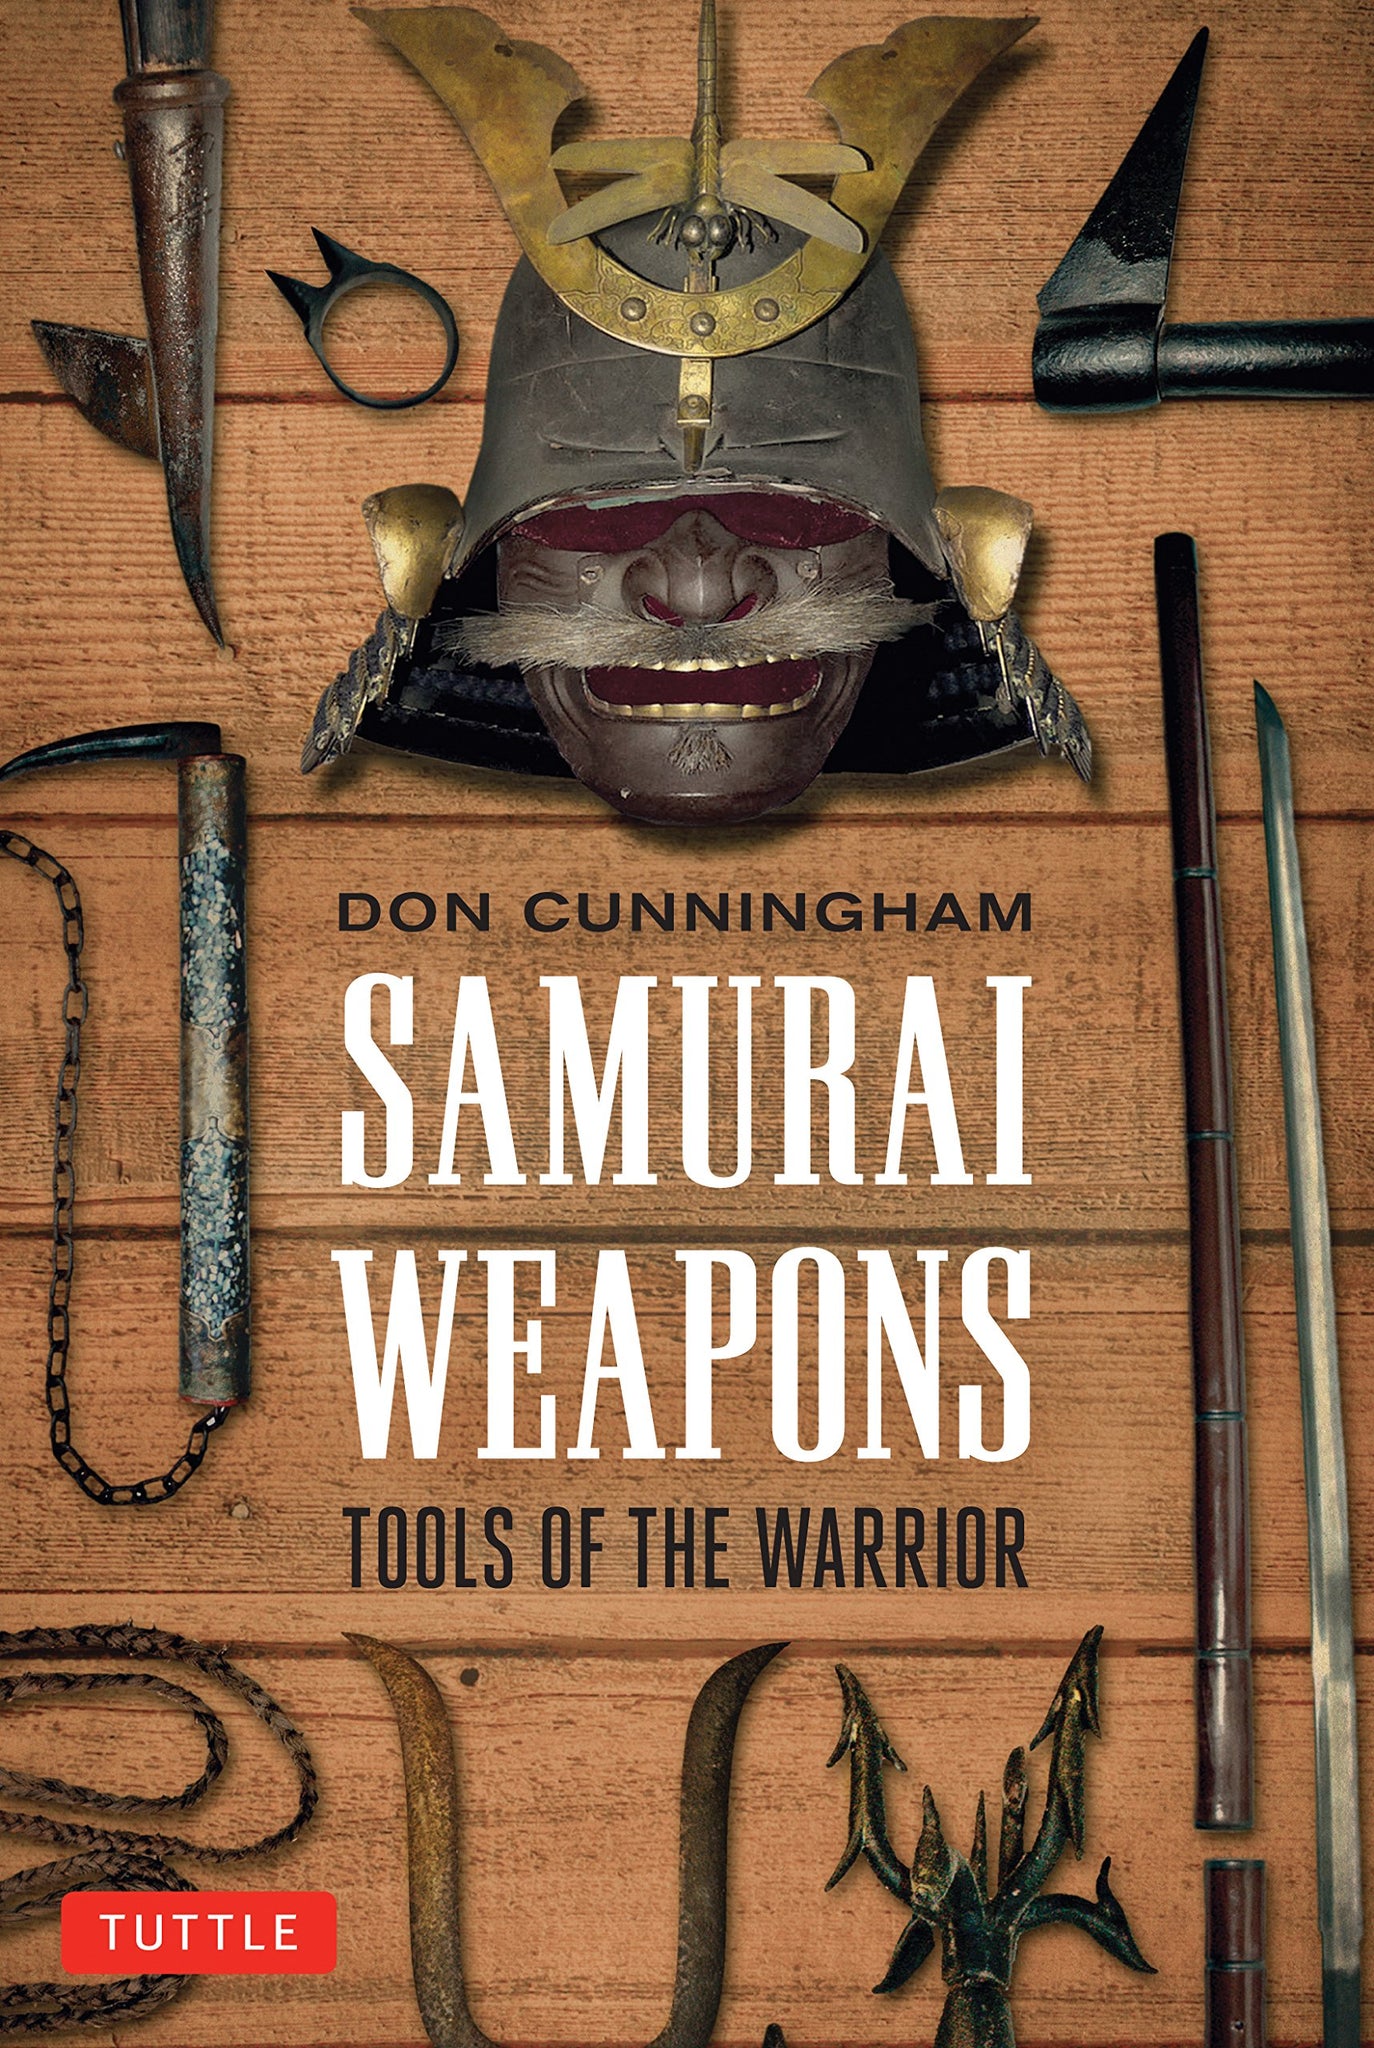 Samurai weapons